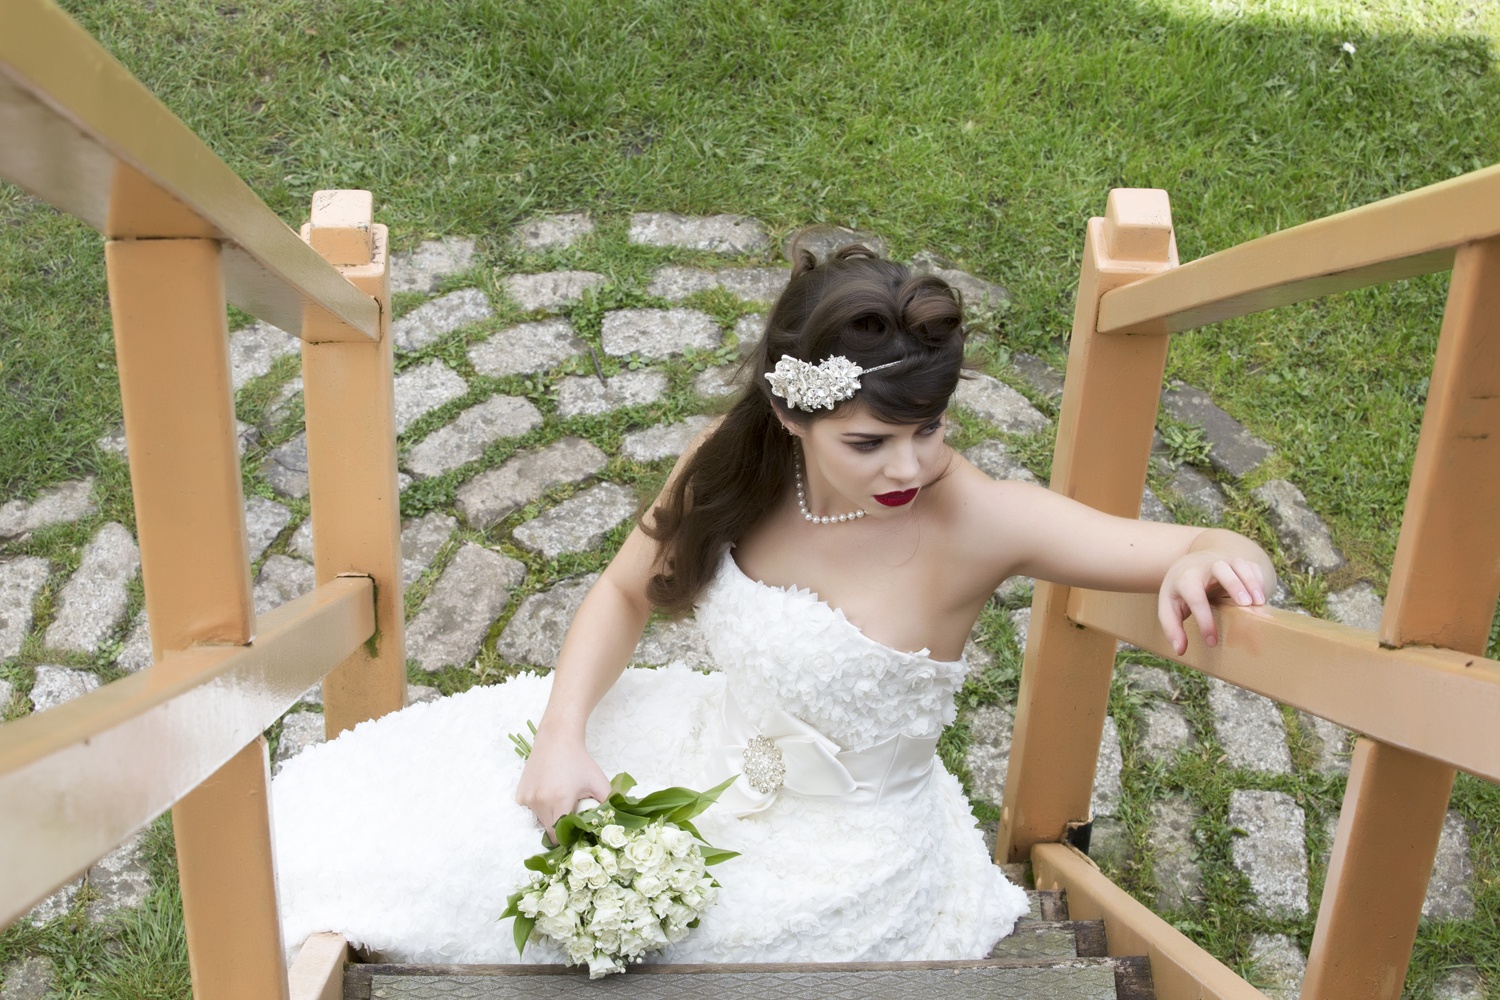 Morlove Wedding Photography - Charlene Lovesy - Bridal Photography at The Old Station, Tintern - Wedding Dress & Vendor Styled Shoot